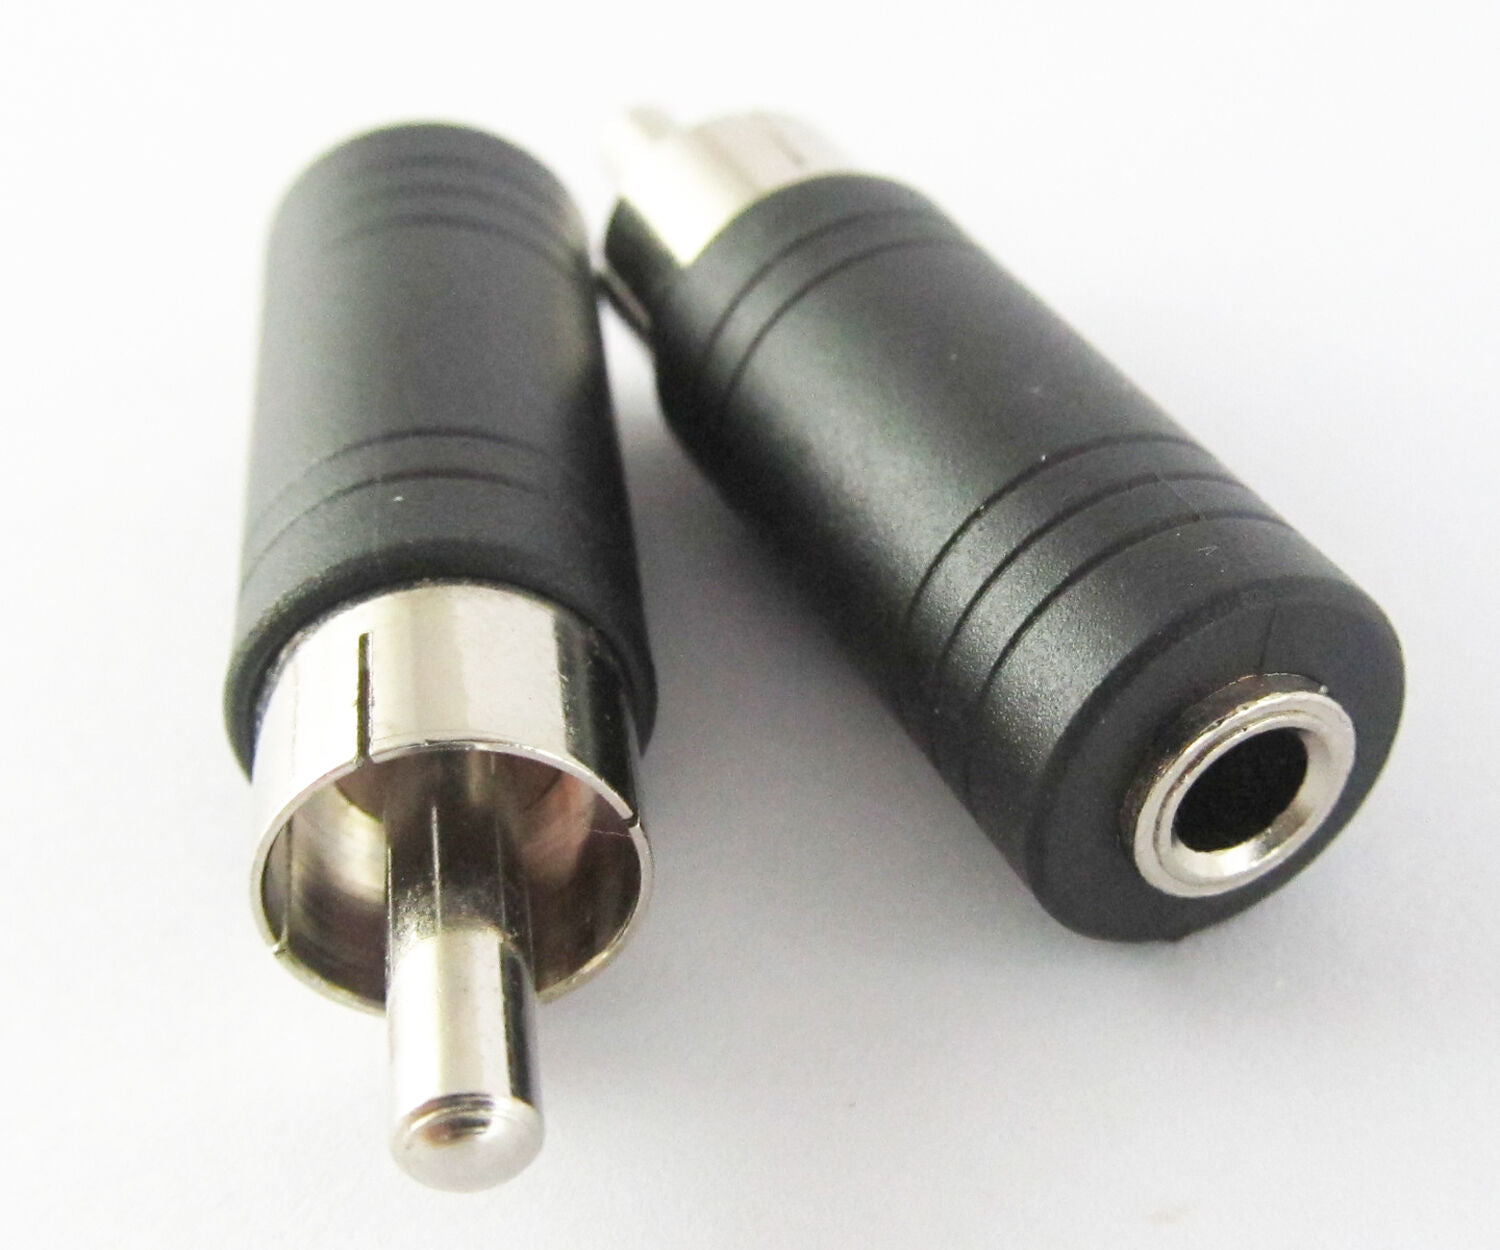 10pcs Phono RCA Male Plug to 1/8" 3.5mm Mono Female Audio Adapter Converter